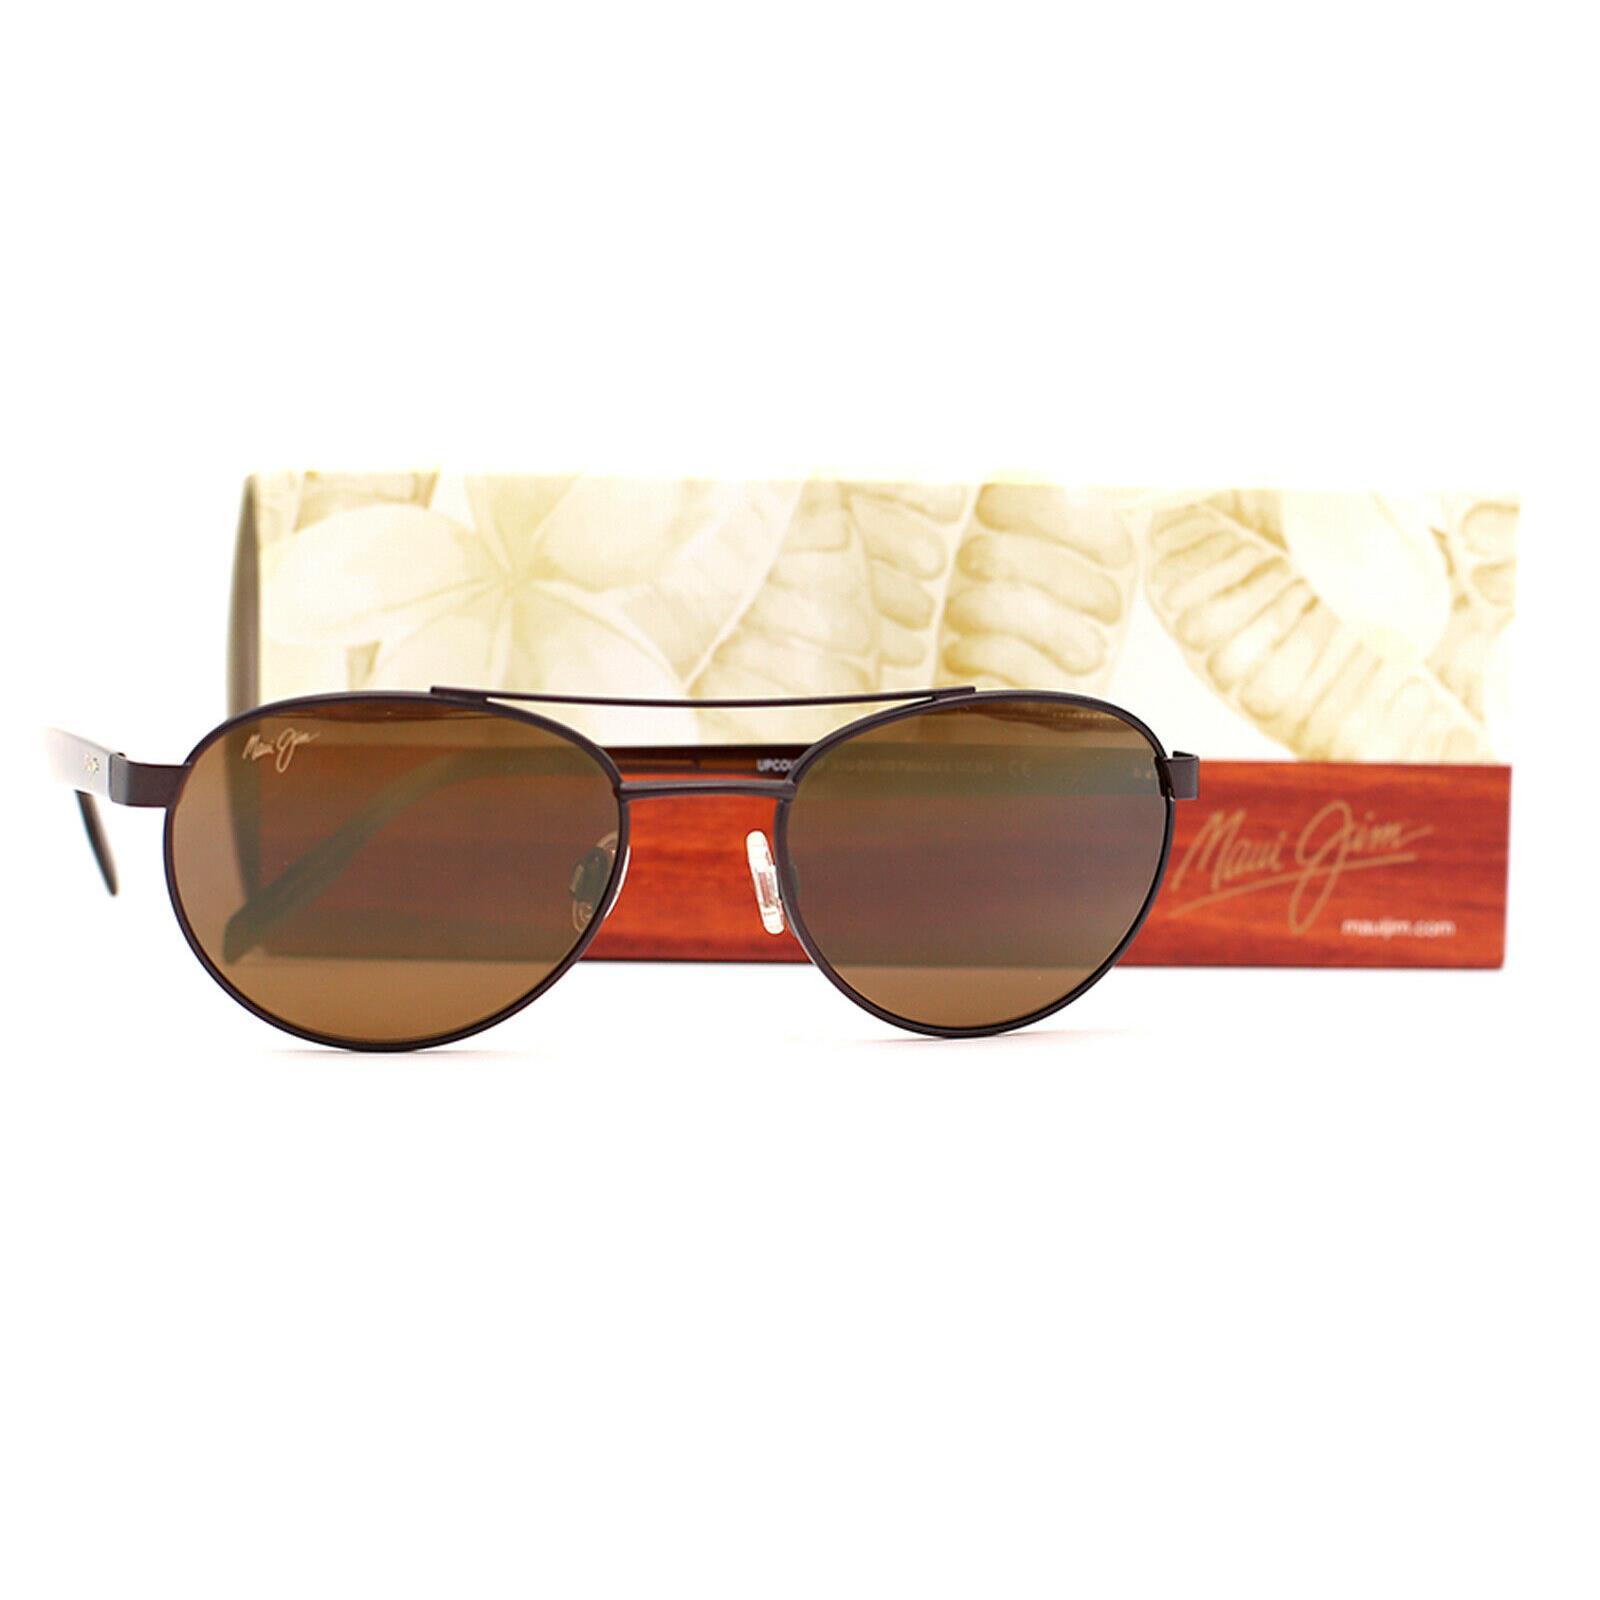 Maui Jim Upcountry H727-01M Chocolate Brown Sunglasses Polarized Hcl Bronze Lens